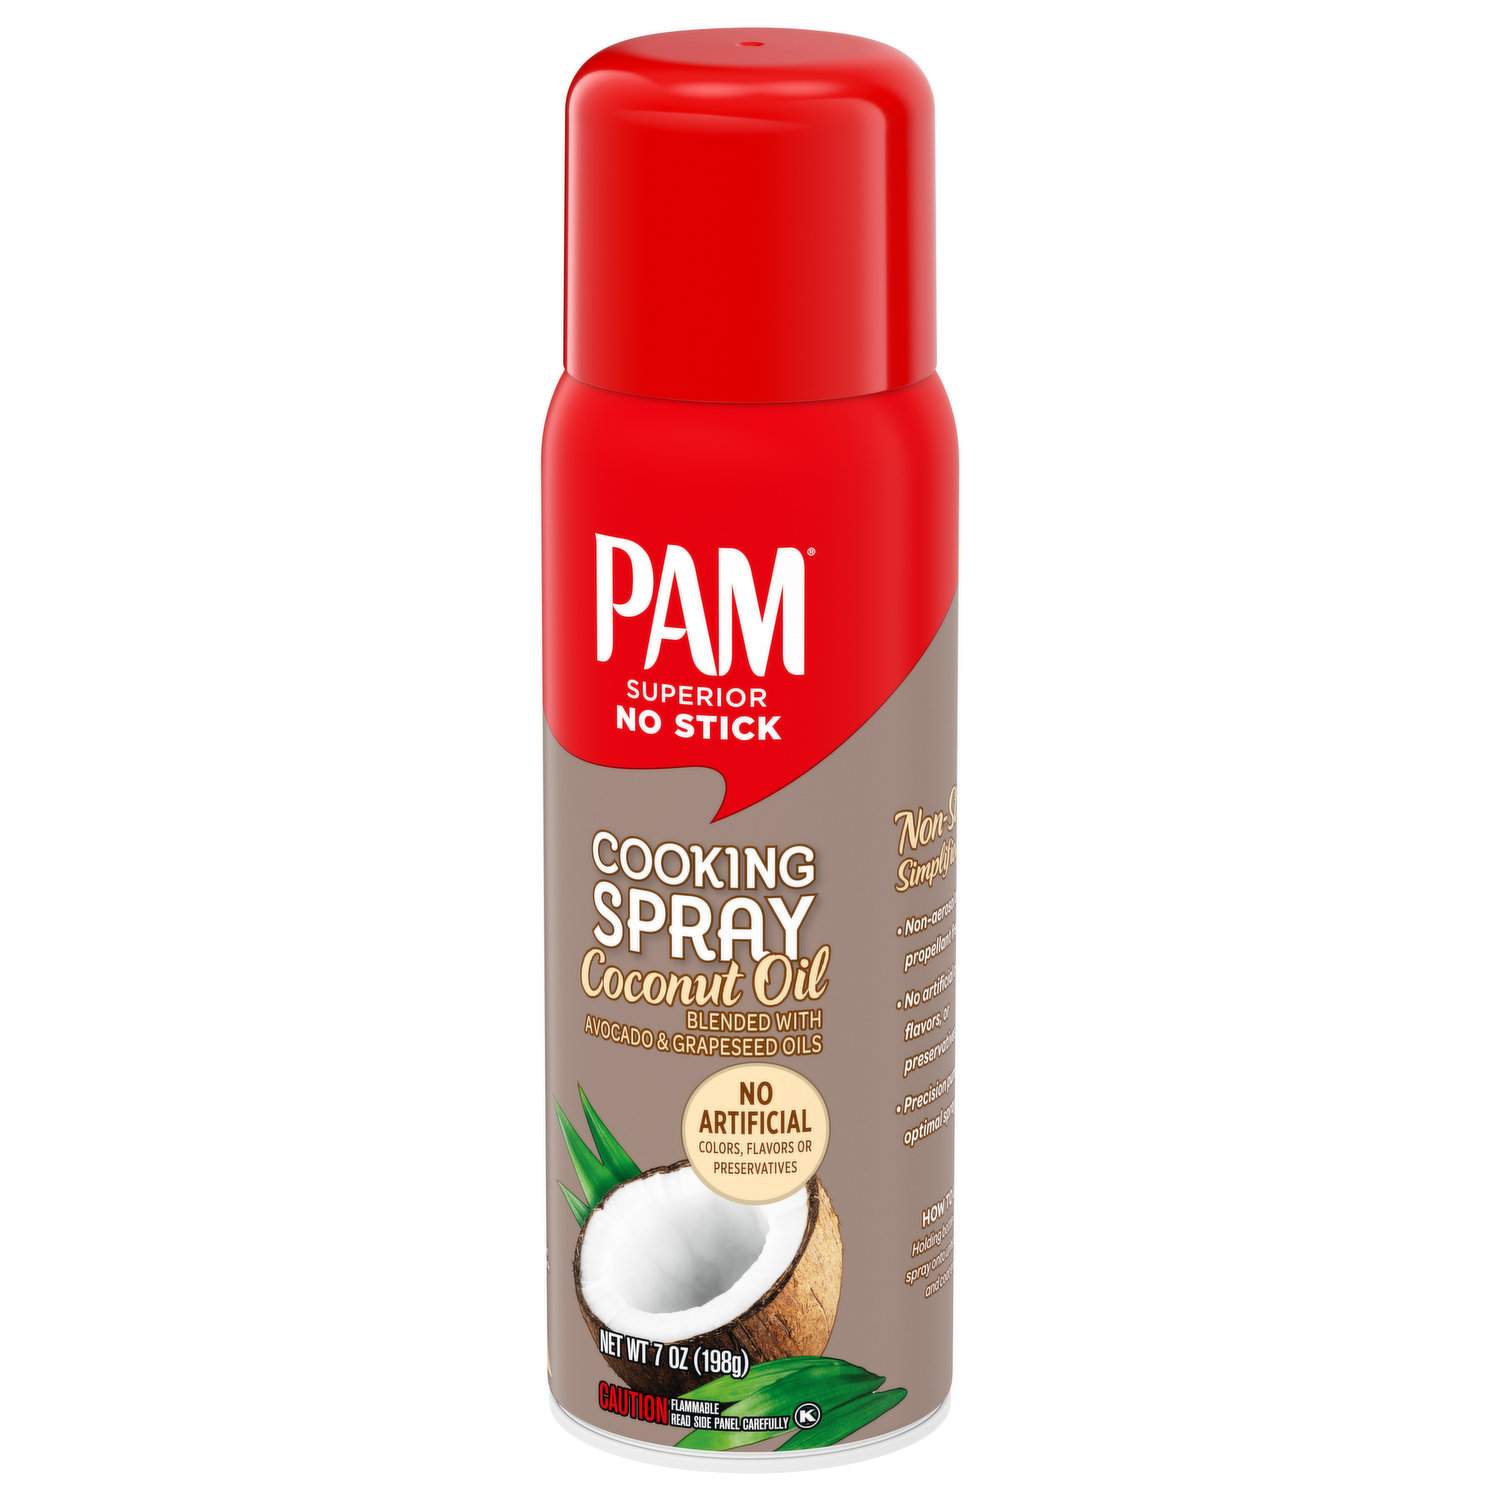  Pam Cooking Spray Original : Non Stick Cooking Sprays